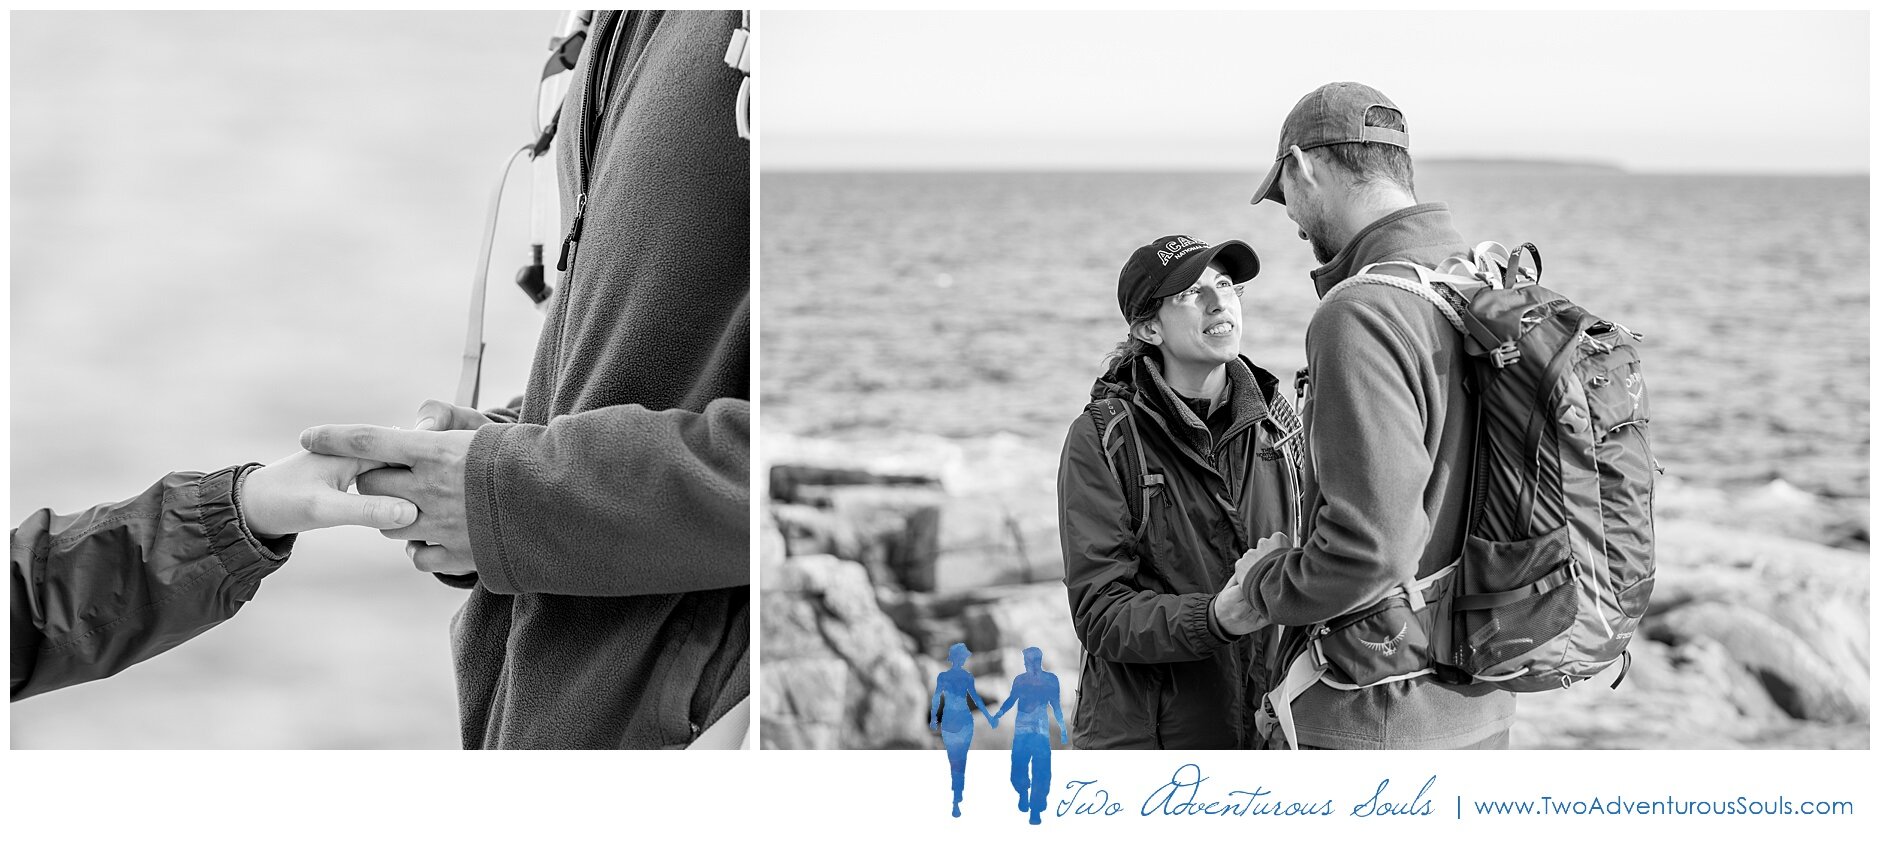 Acadia National Park Surprise Proposal, Bar Harbor Maine Wedding Photographers, Two Adventurous Souls - 052021_0003.jpg